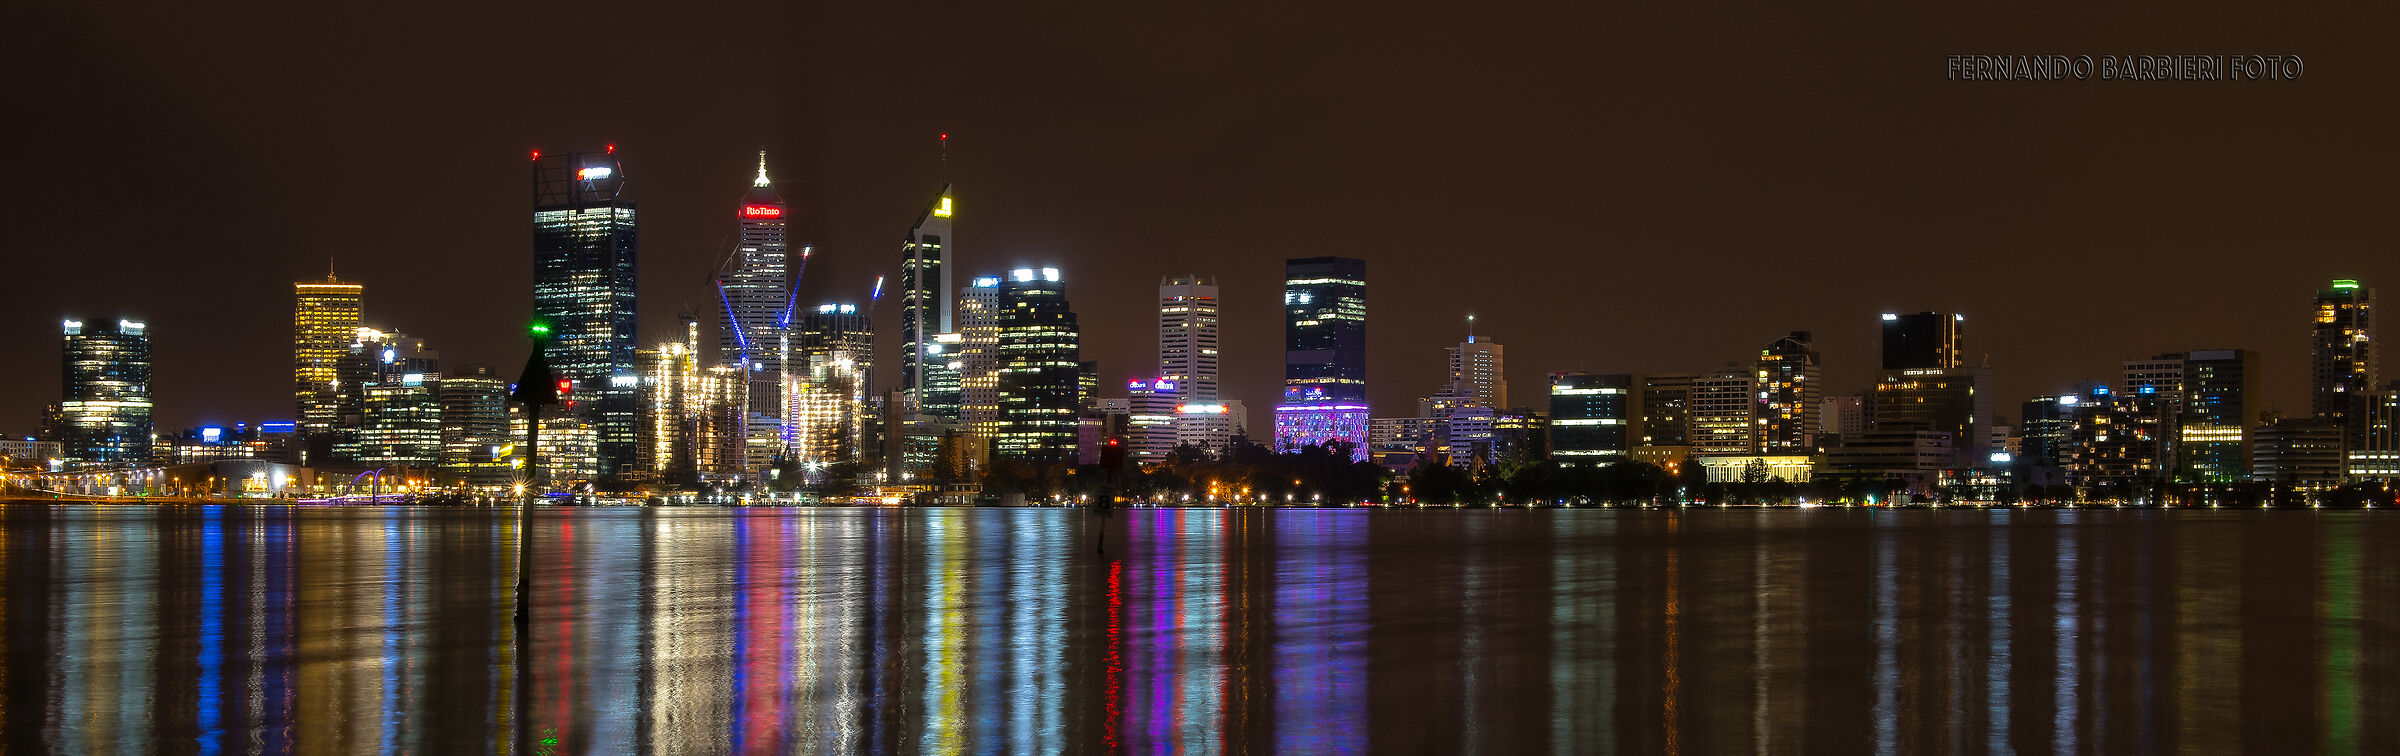 Perth by night...